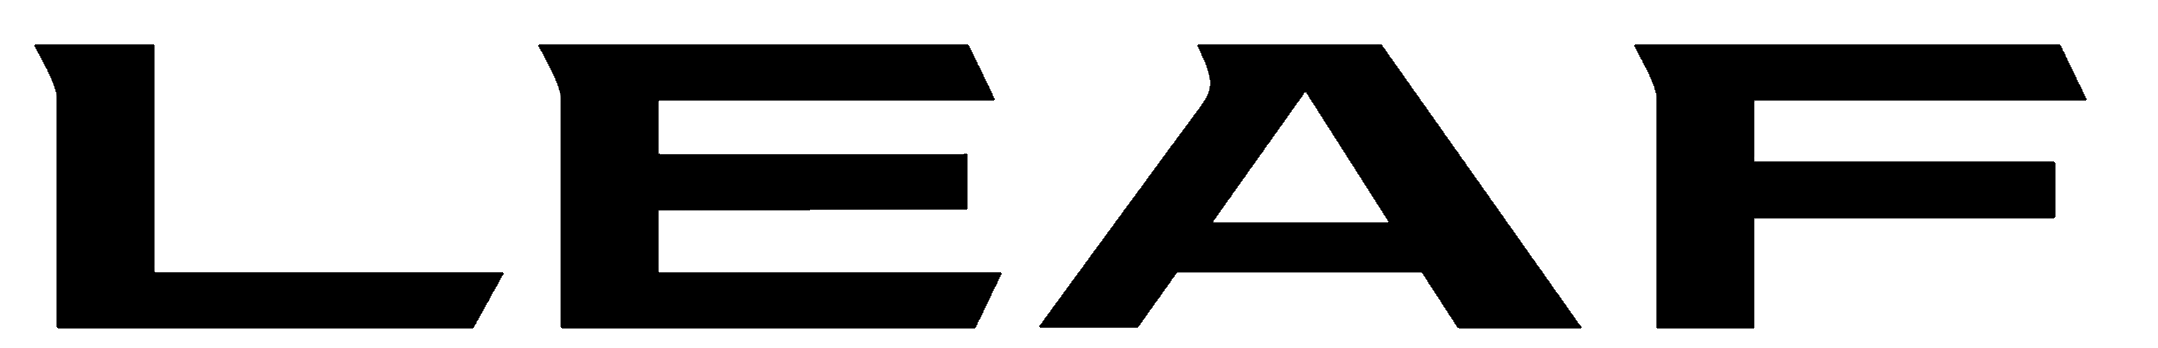 Leaf Logo History